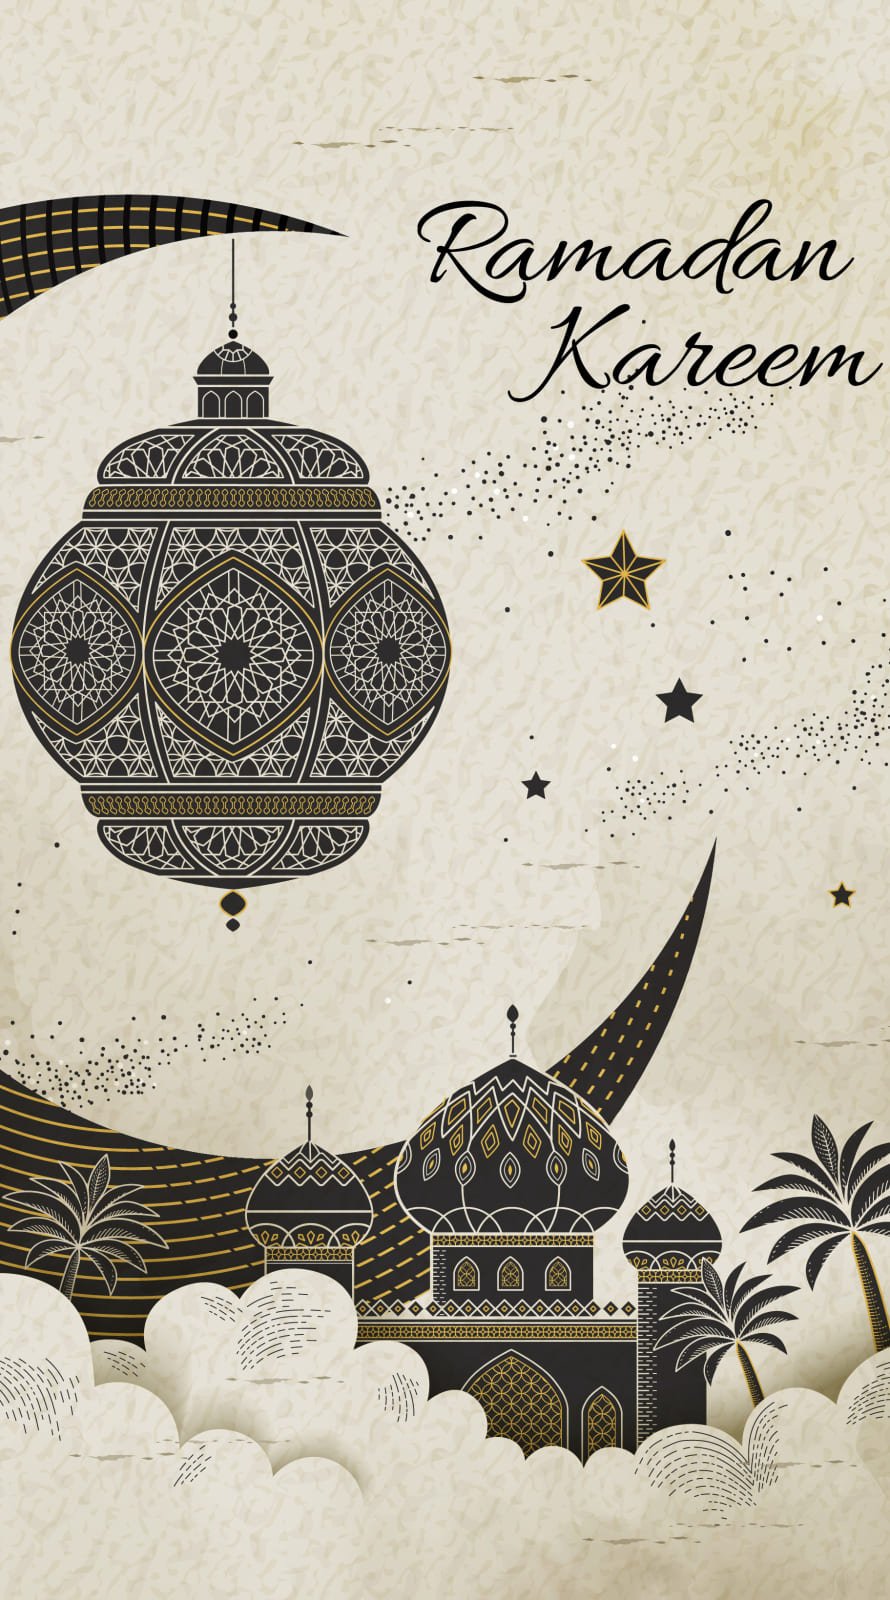 Ramadan wallpaper iPhone backgrounds